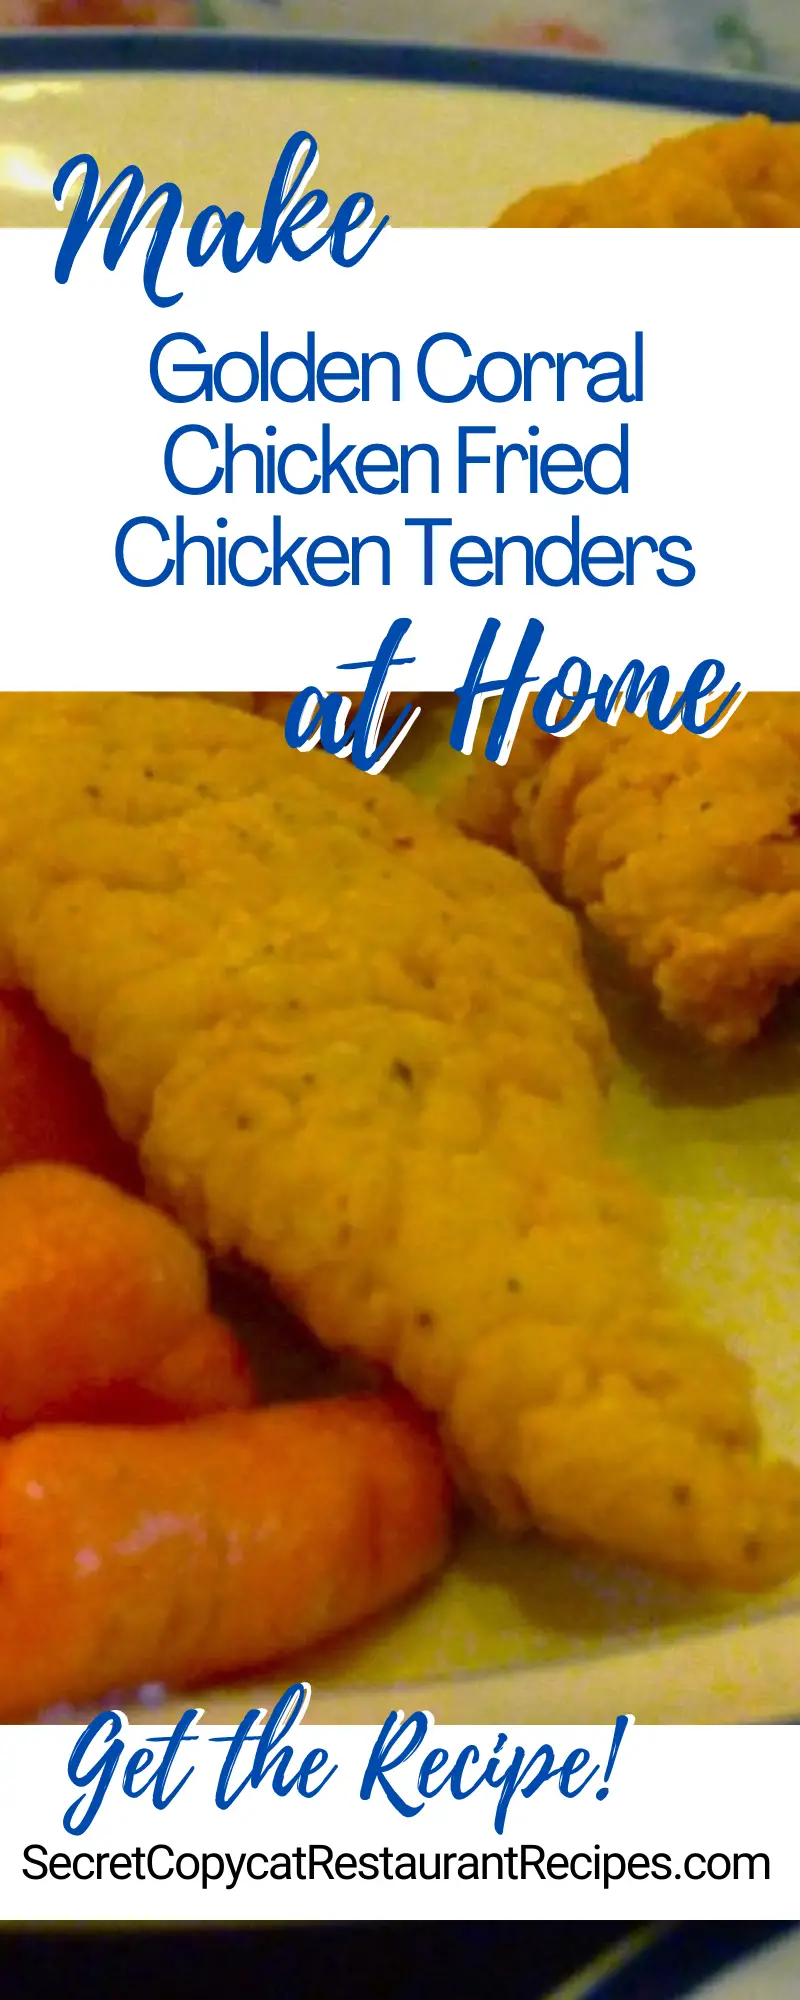 Golden Corral Chicken Fried Chicken Tenders Recipe